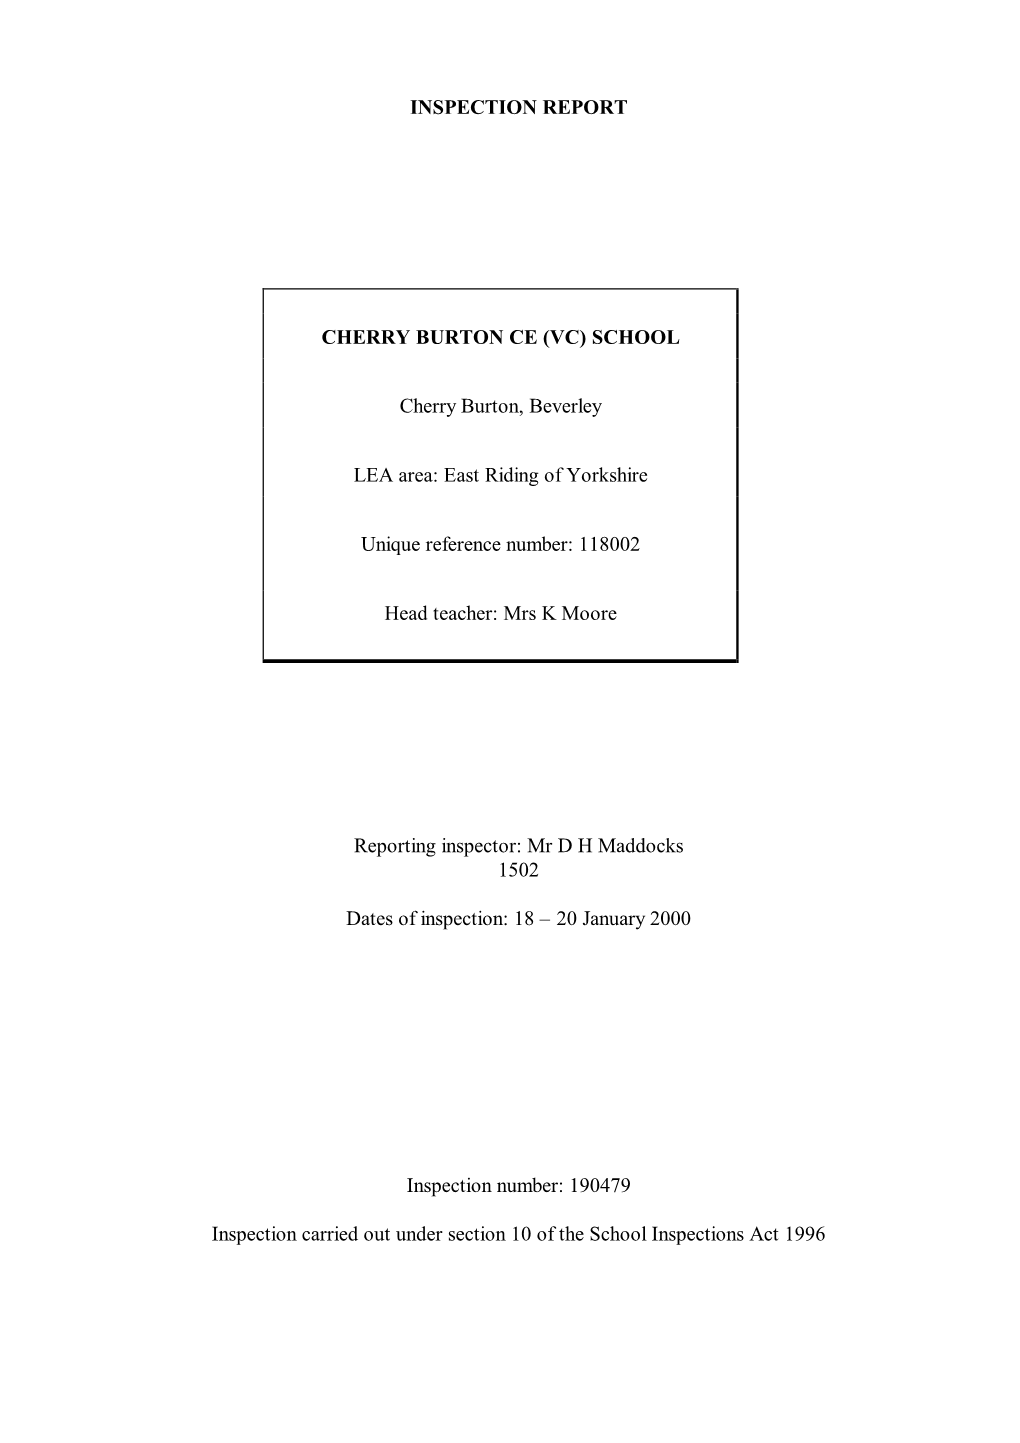 INSPECTION REPORT CHERRY BURTON CE (VC) SCHOOL Cherry